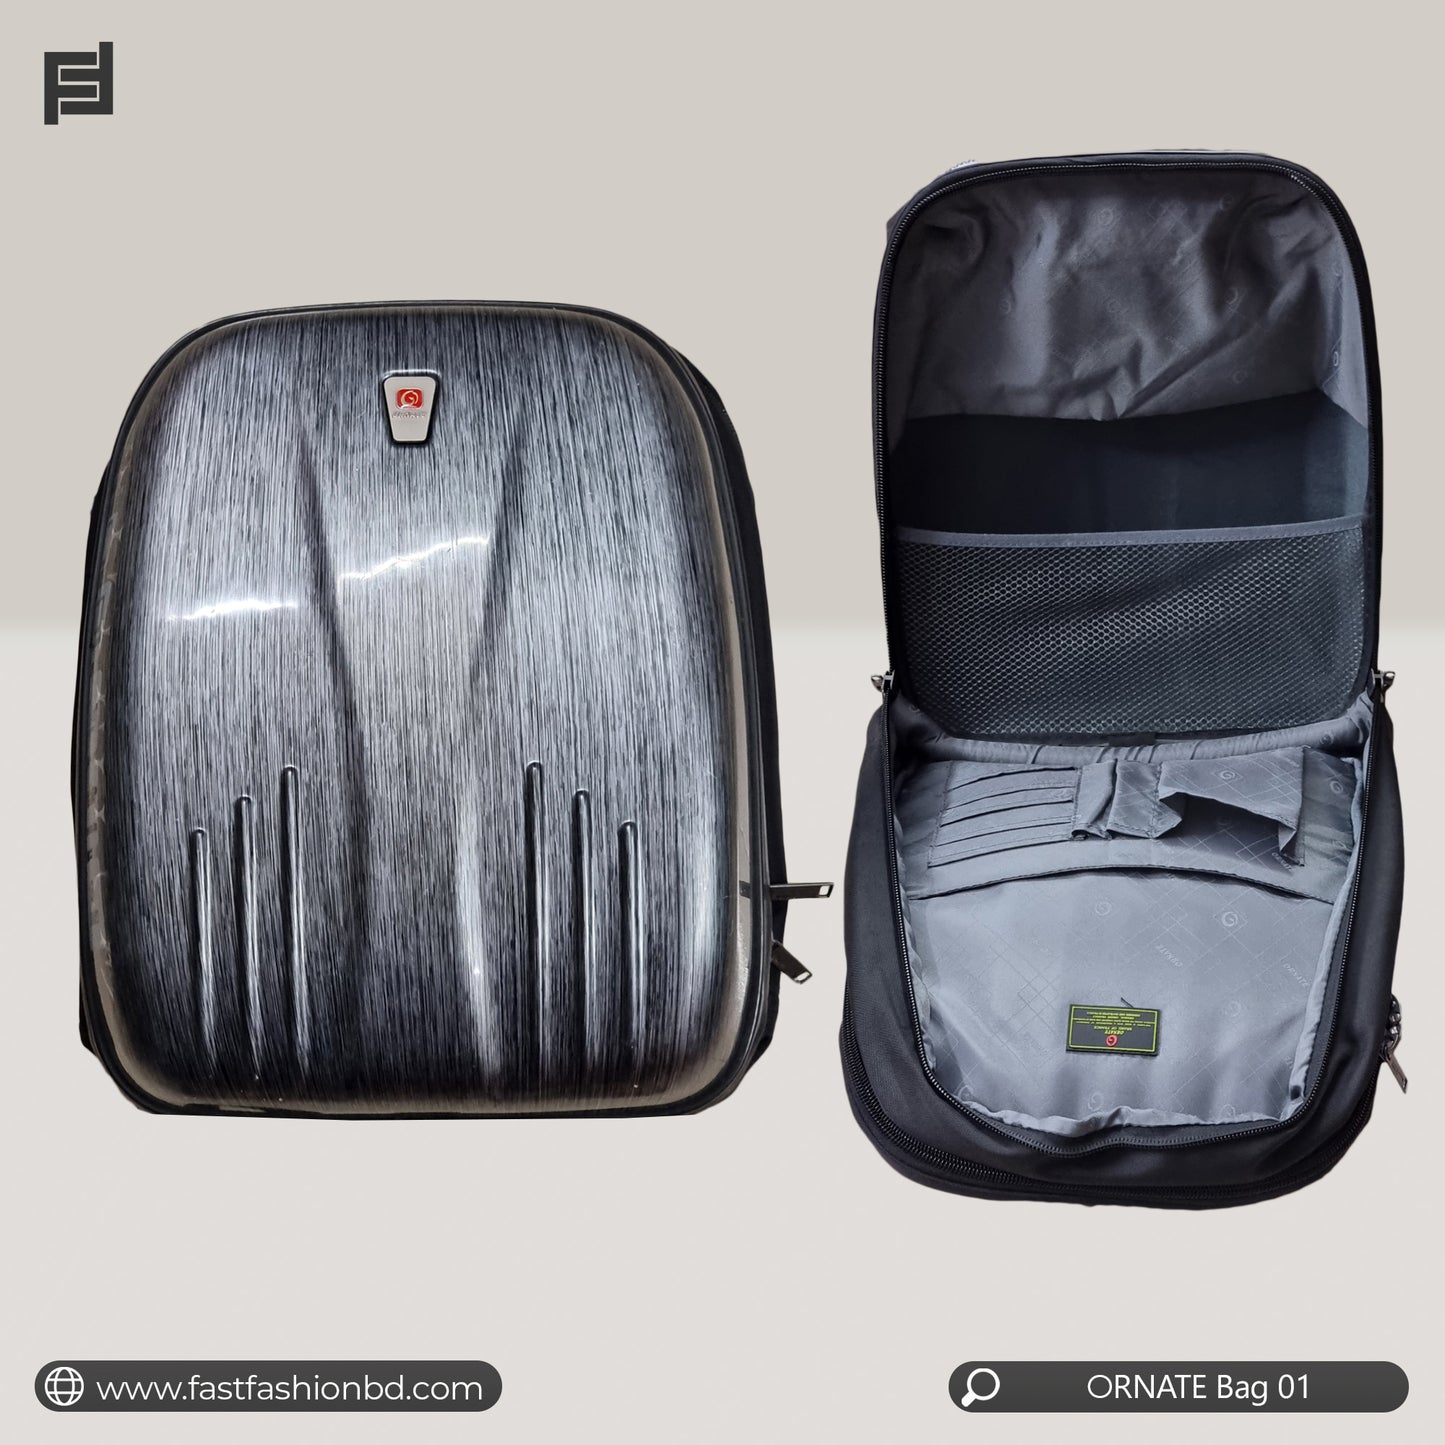 ORNATE Bag A Anti-theft Shockproof Hard Shell Waterproof Bag - ORNATE Bag 01